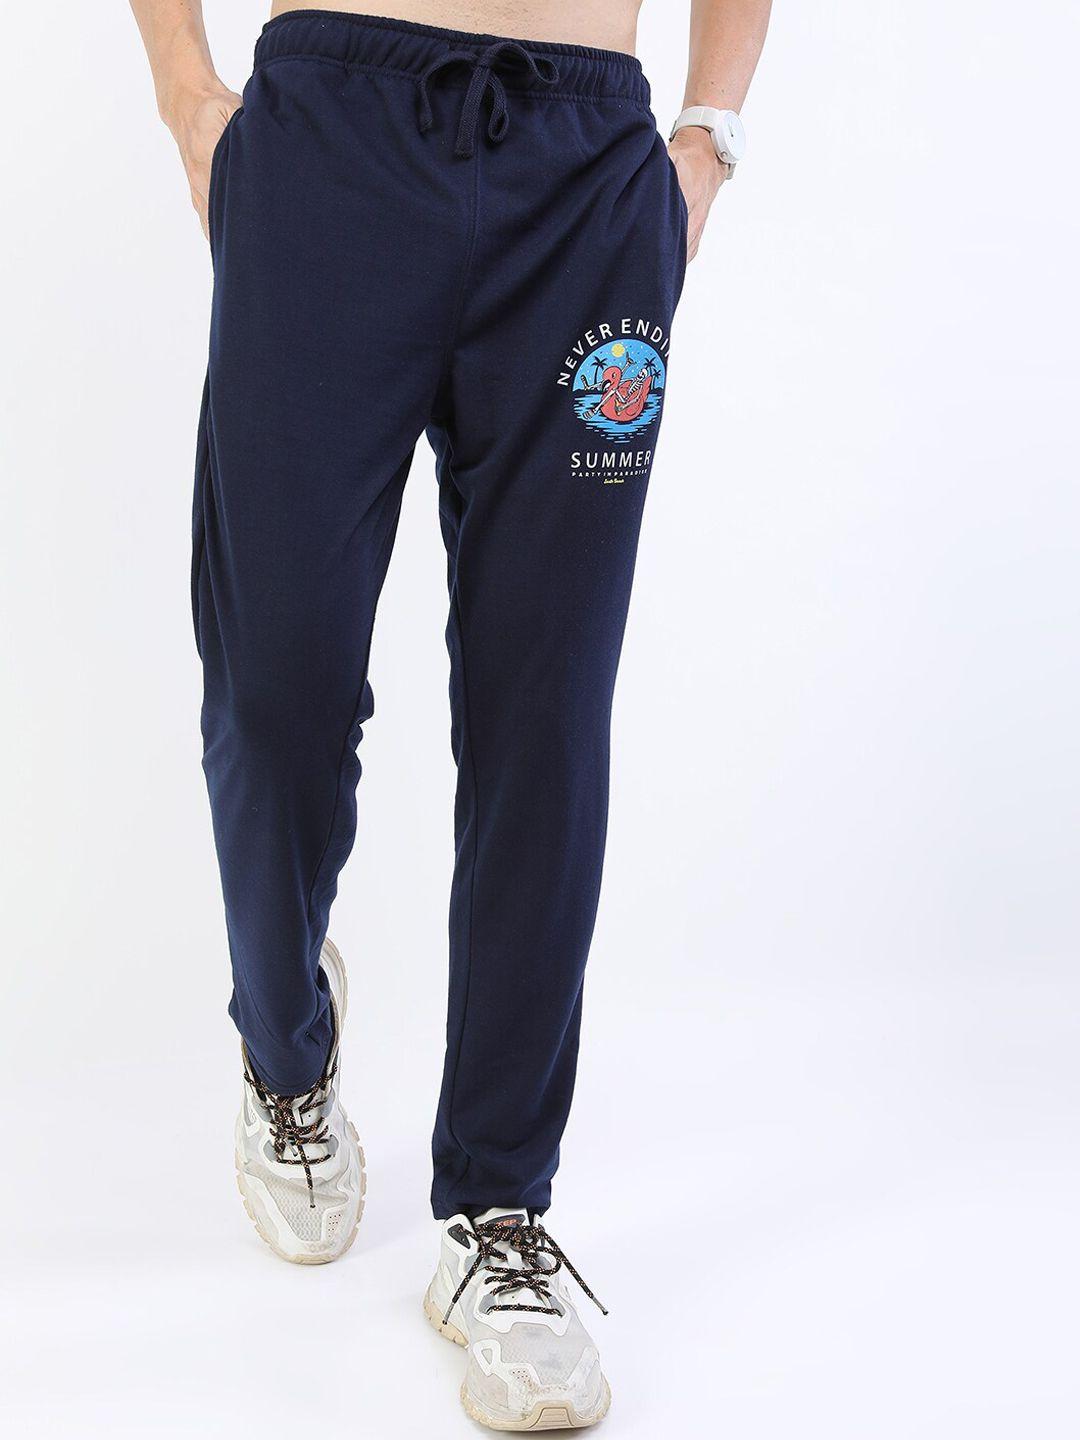 ketch-men-navy-blue-printed-track-pants